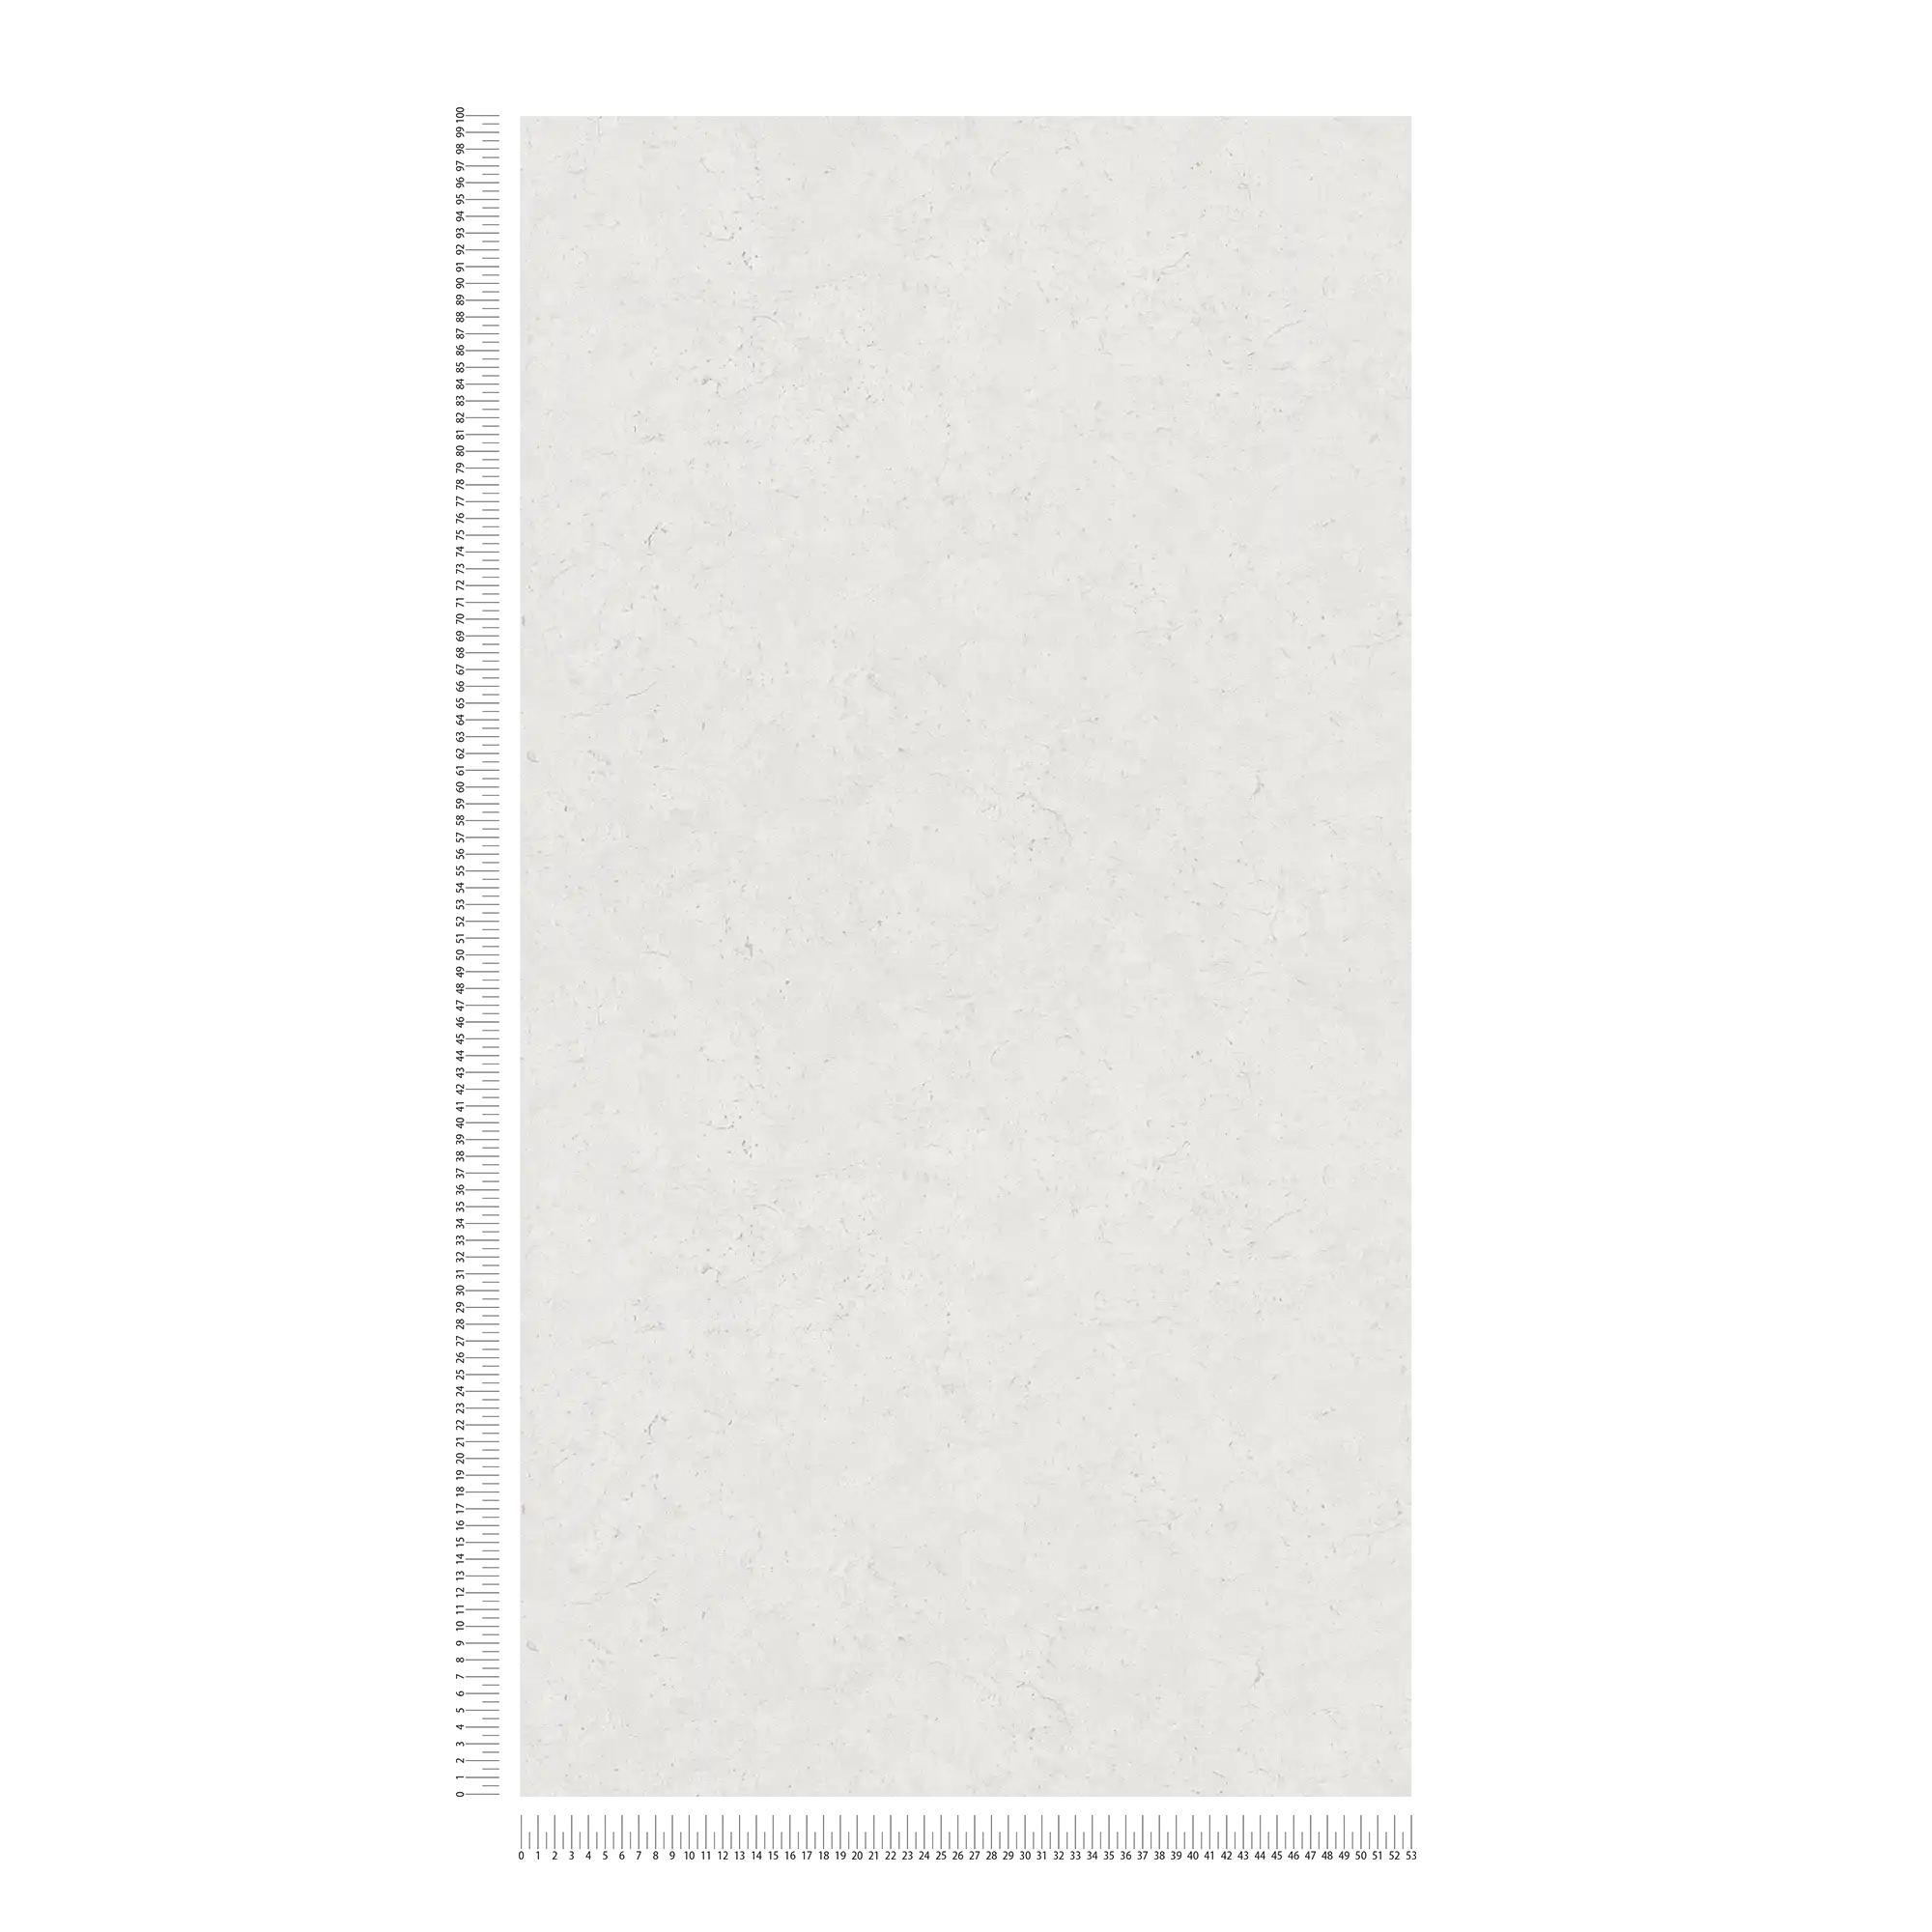             Papier peint intissé uni imitation béton - gris, blanc
        